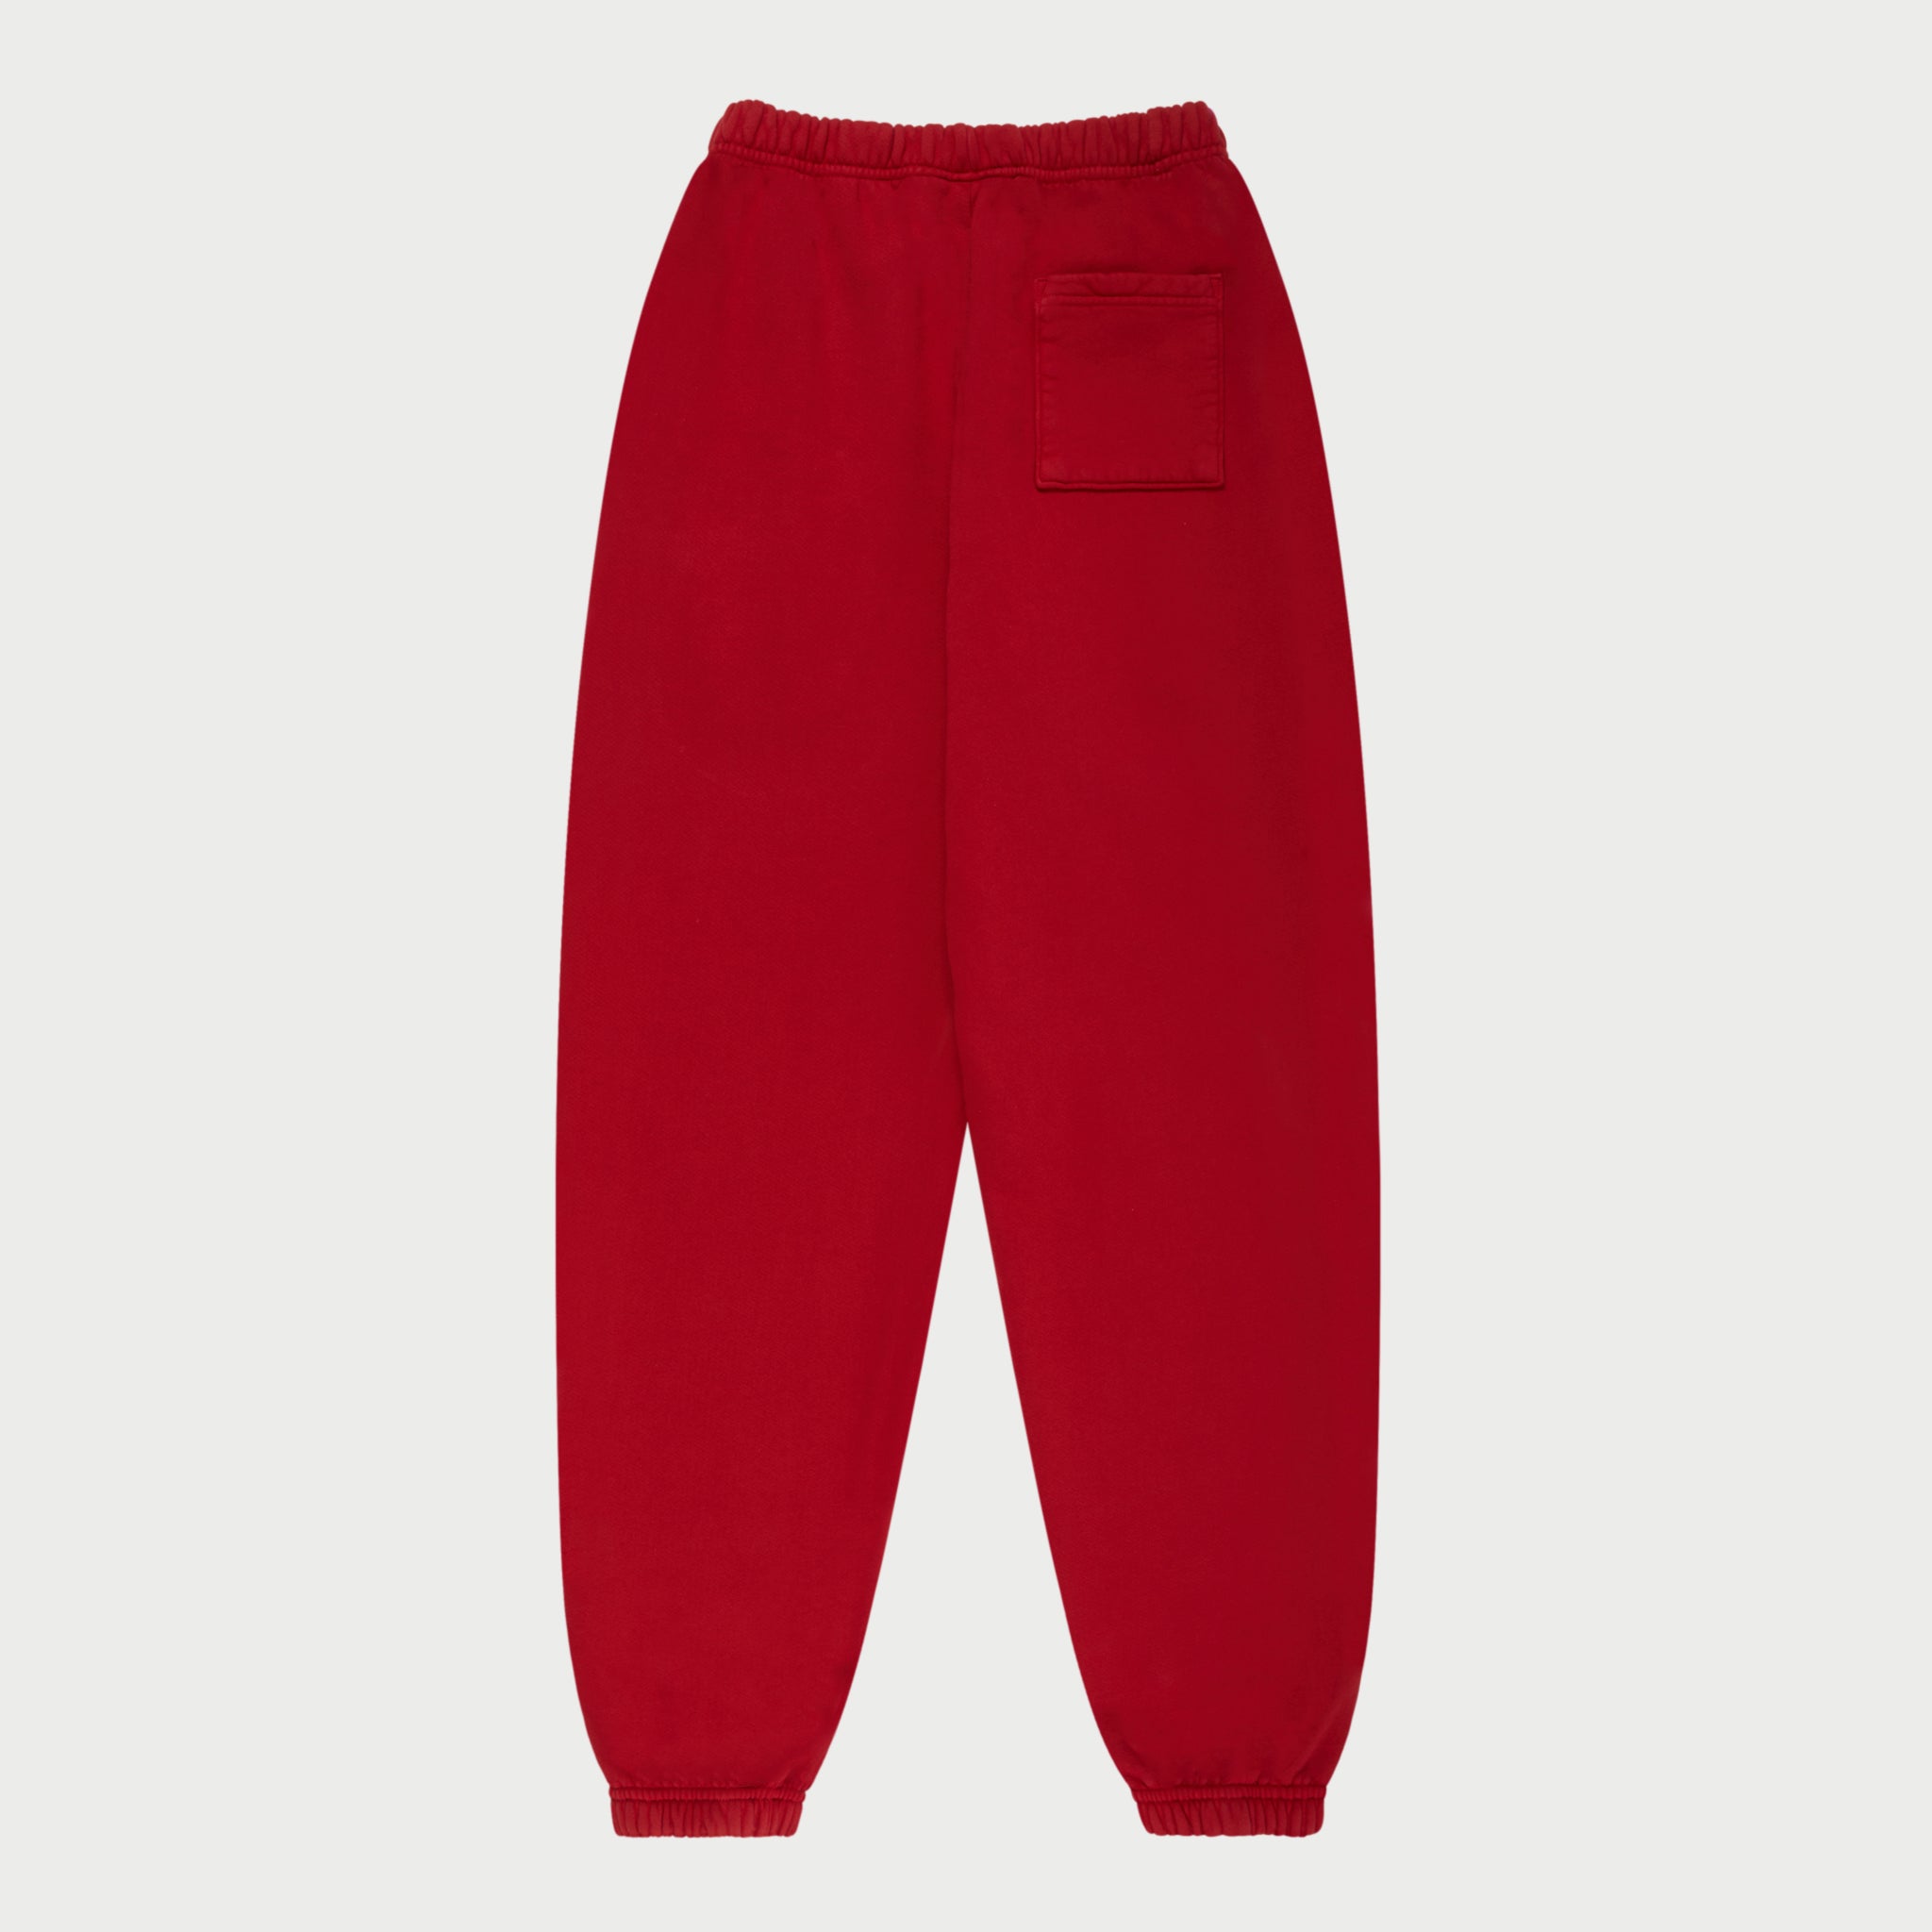  Arkansas Open Bottom Red Sweat Pants (Medium) : Clothing, Shoes  & Jewelry